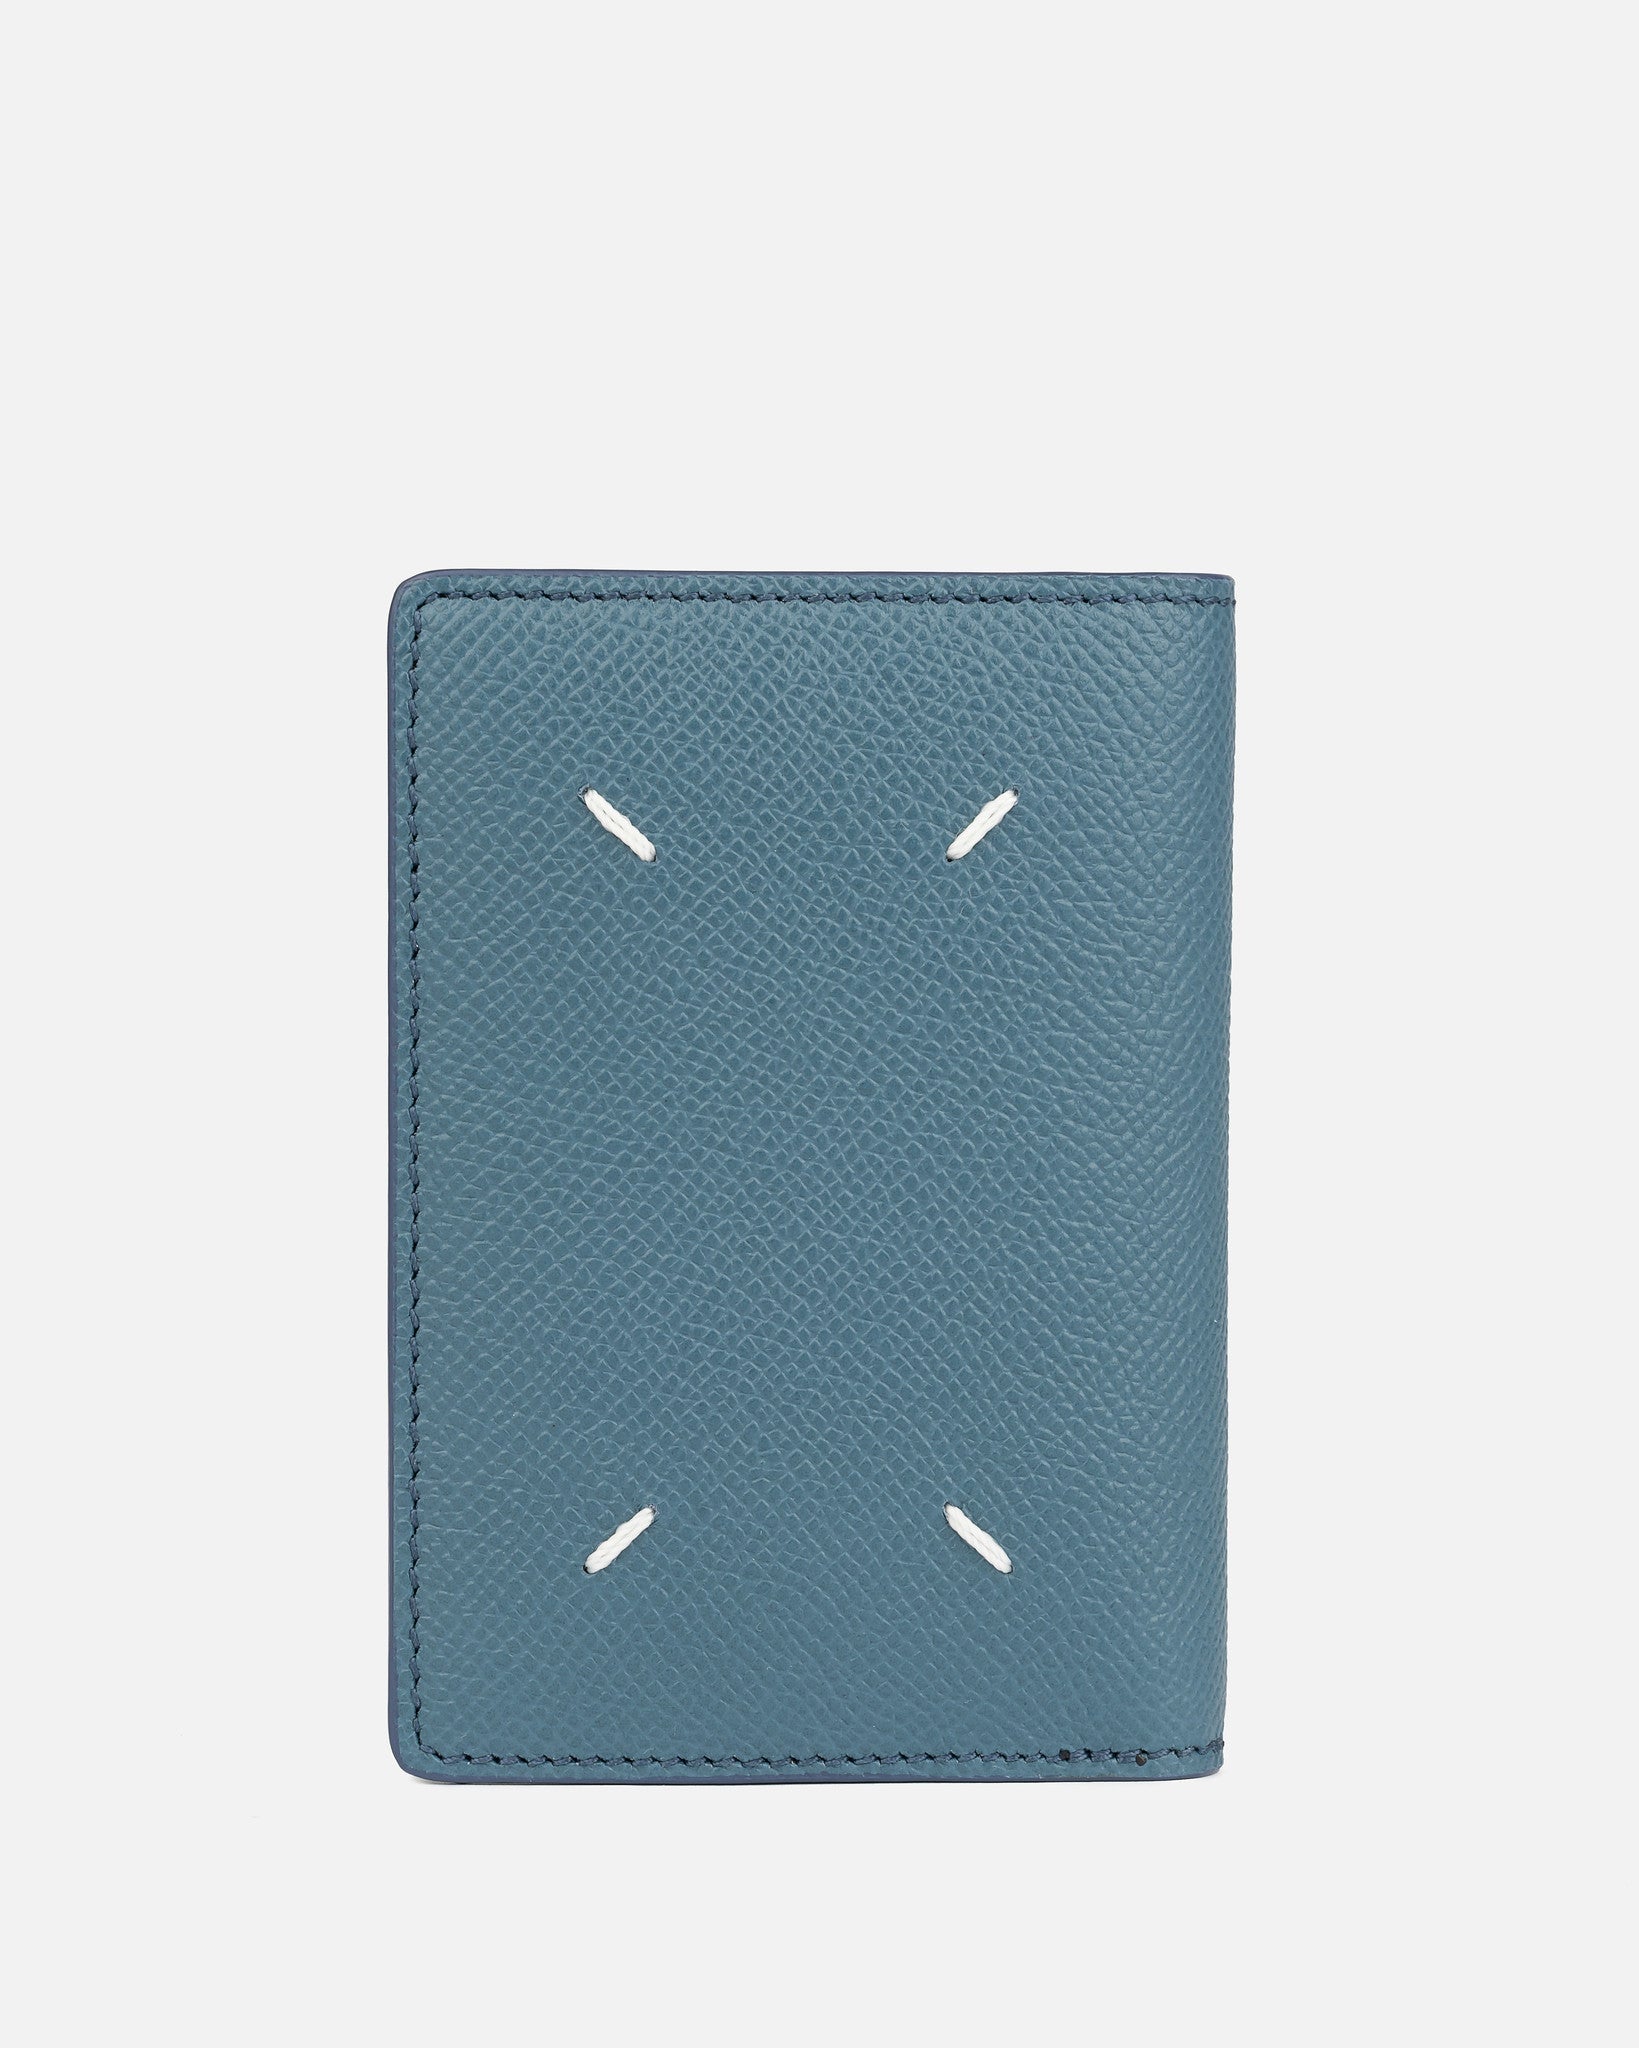 Maison Margiela Wallets & Money Clips Leather Bifold Card Holder in Slate Blue